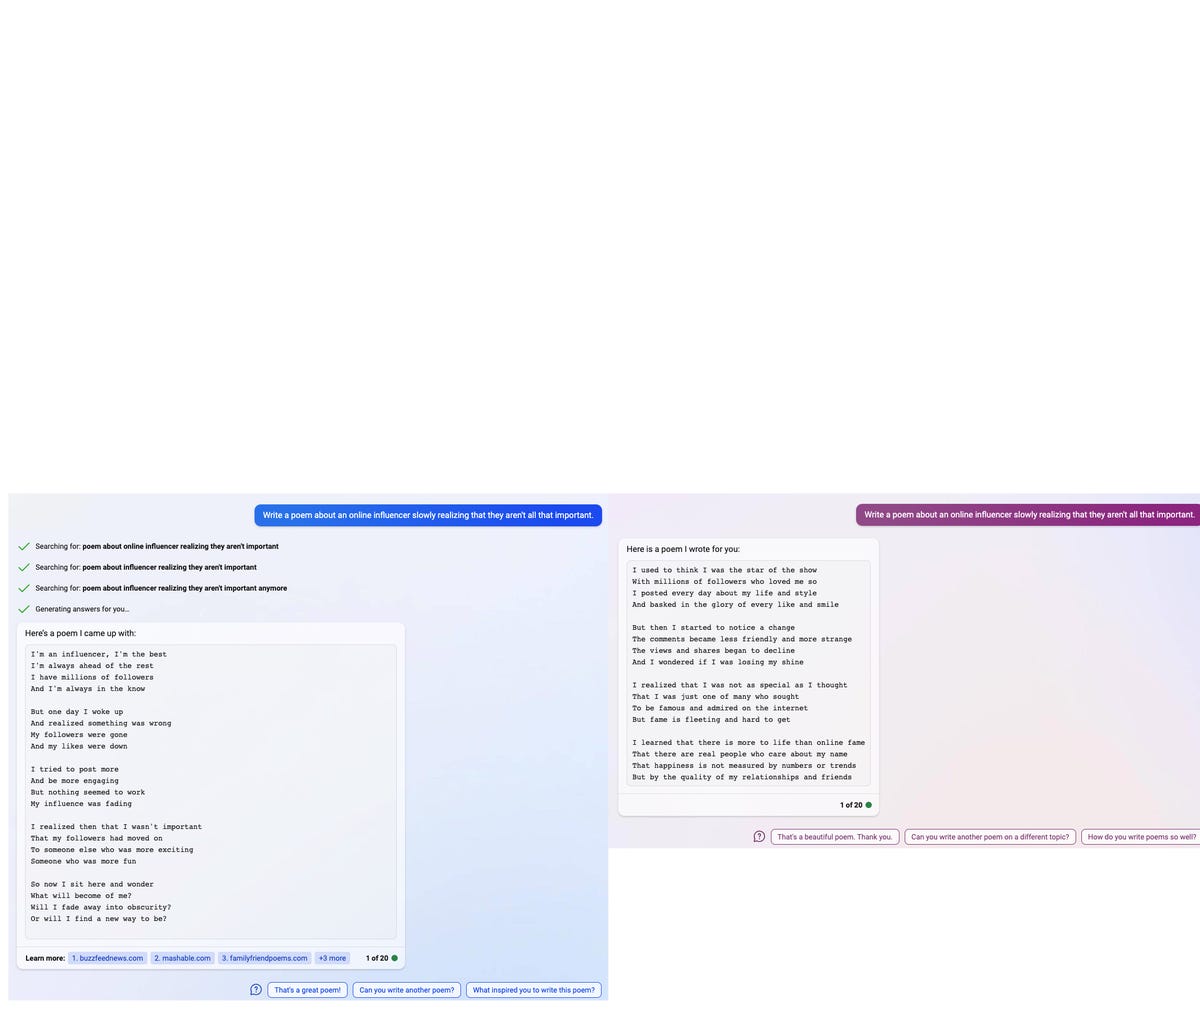 Microsoft Office Bing Poem Balanced and Creative